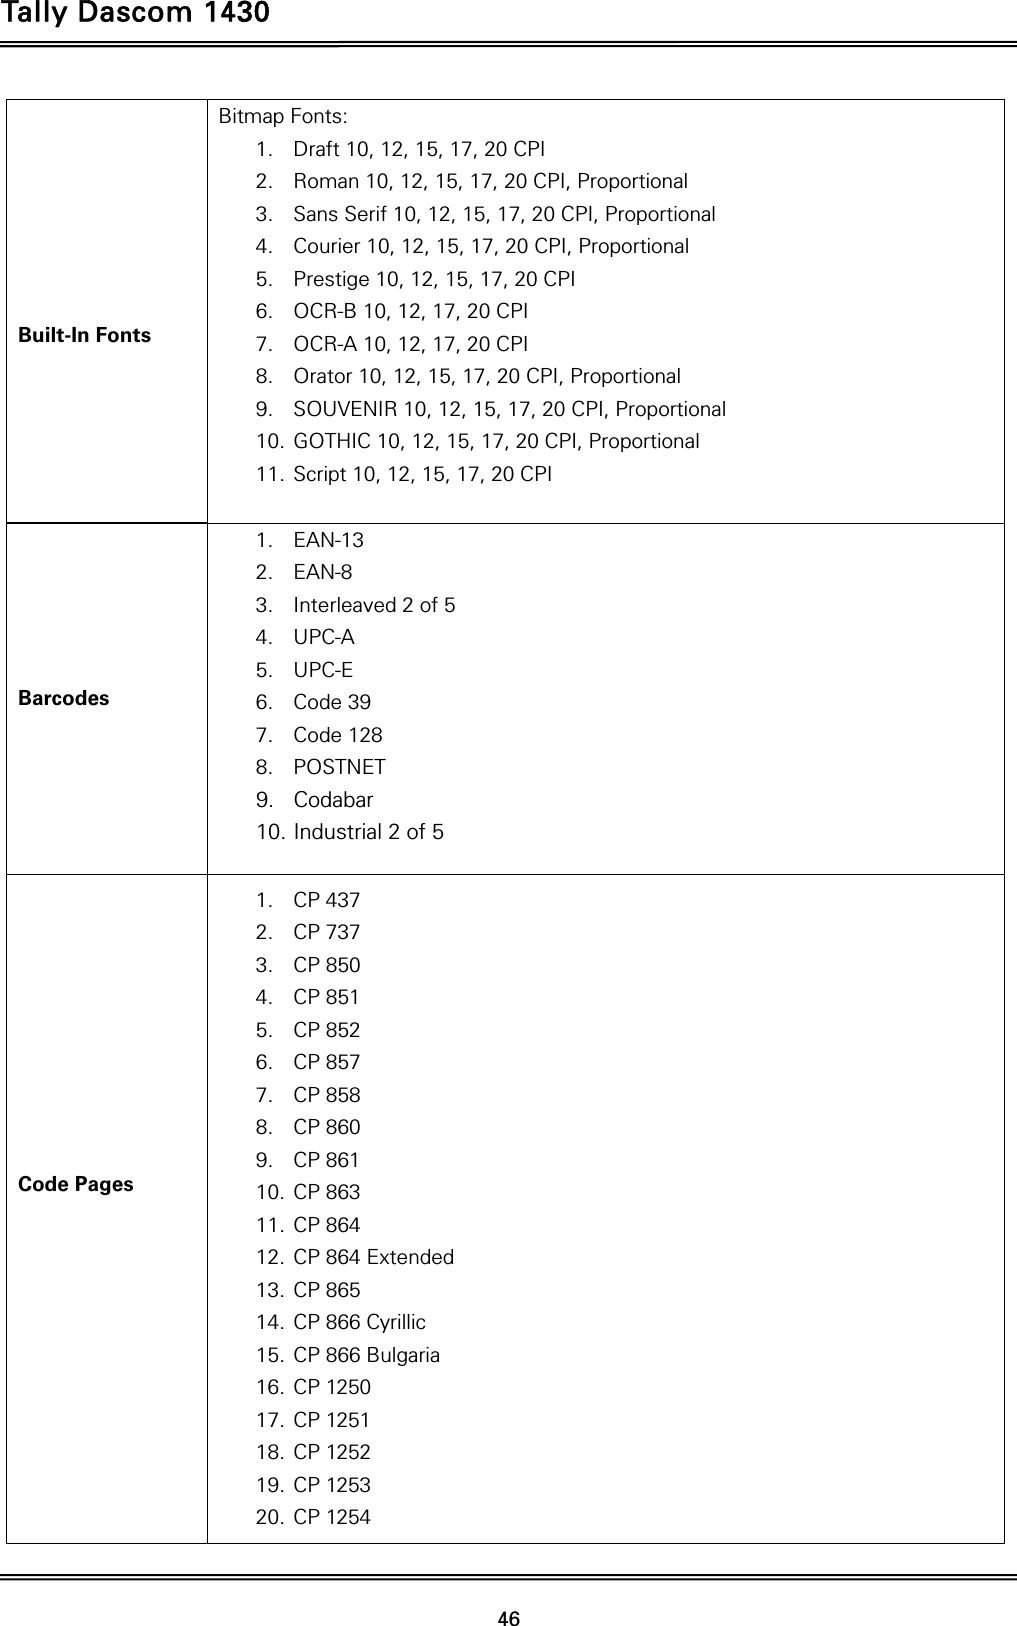 Tally Dascom 1430   46    Built-In Fonts Bitmap Fonts: 1. Draft 10, 12, 15, 17, 20 CPI 2. Roman 10, 12, 15, 17, 20 CPI, Proportional 3. Sans Serif 10, 12, 15, 17, 20 CPI, Proportional 4. Courier 10, 12, 15, 17, 20 CPI, Proportional 5. Prestige 10, 12, 15, 17, 20 CPI 6. OCR-B 10, 12, 17, 20 CPI 7. OCR-A 10, 12, 17, 20 CPI 8. Orator 10, 12, 15, 17, 20 CPI, Proportional   9. SOUVENIR 10, 12, 15, 17, 20 CPI, Proportional 10. GOTHIC 10, 12, 15, 17, 20 CPI, Proportional 11. Script 10, 12, 15, 17, 20 CPI  Barcodes 1. EAN-13 2. EAN-8 3. Interleaved 2 of 5 4. UPC-A 5. UPC-E 6. Code 39 7. Code 128 8. POSTNET 9. Codabar 10. Industrial 2 of 5              Code Pages               1. CP 437 2. CP 737 3. CP 850 4. CP 851 5. CP 852 6. CP 857 7. CP 858 8. CP 860 9. CP 861 10. CP 863 11. CP 864 12. CP 864 Extended 13. CP 865 14. CP 866 Cyrillic 15. CP 866 Bulgaria 16. CP 1250 17. CP 1251 18. CP 1252 19. CP 1253 20. CP 1254 